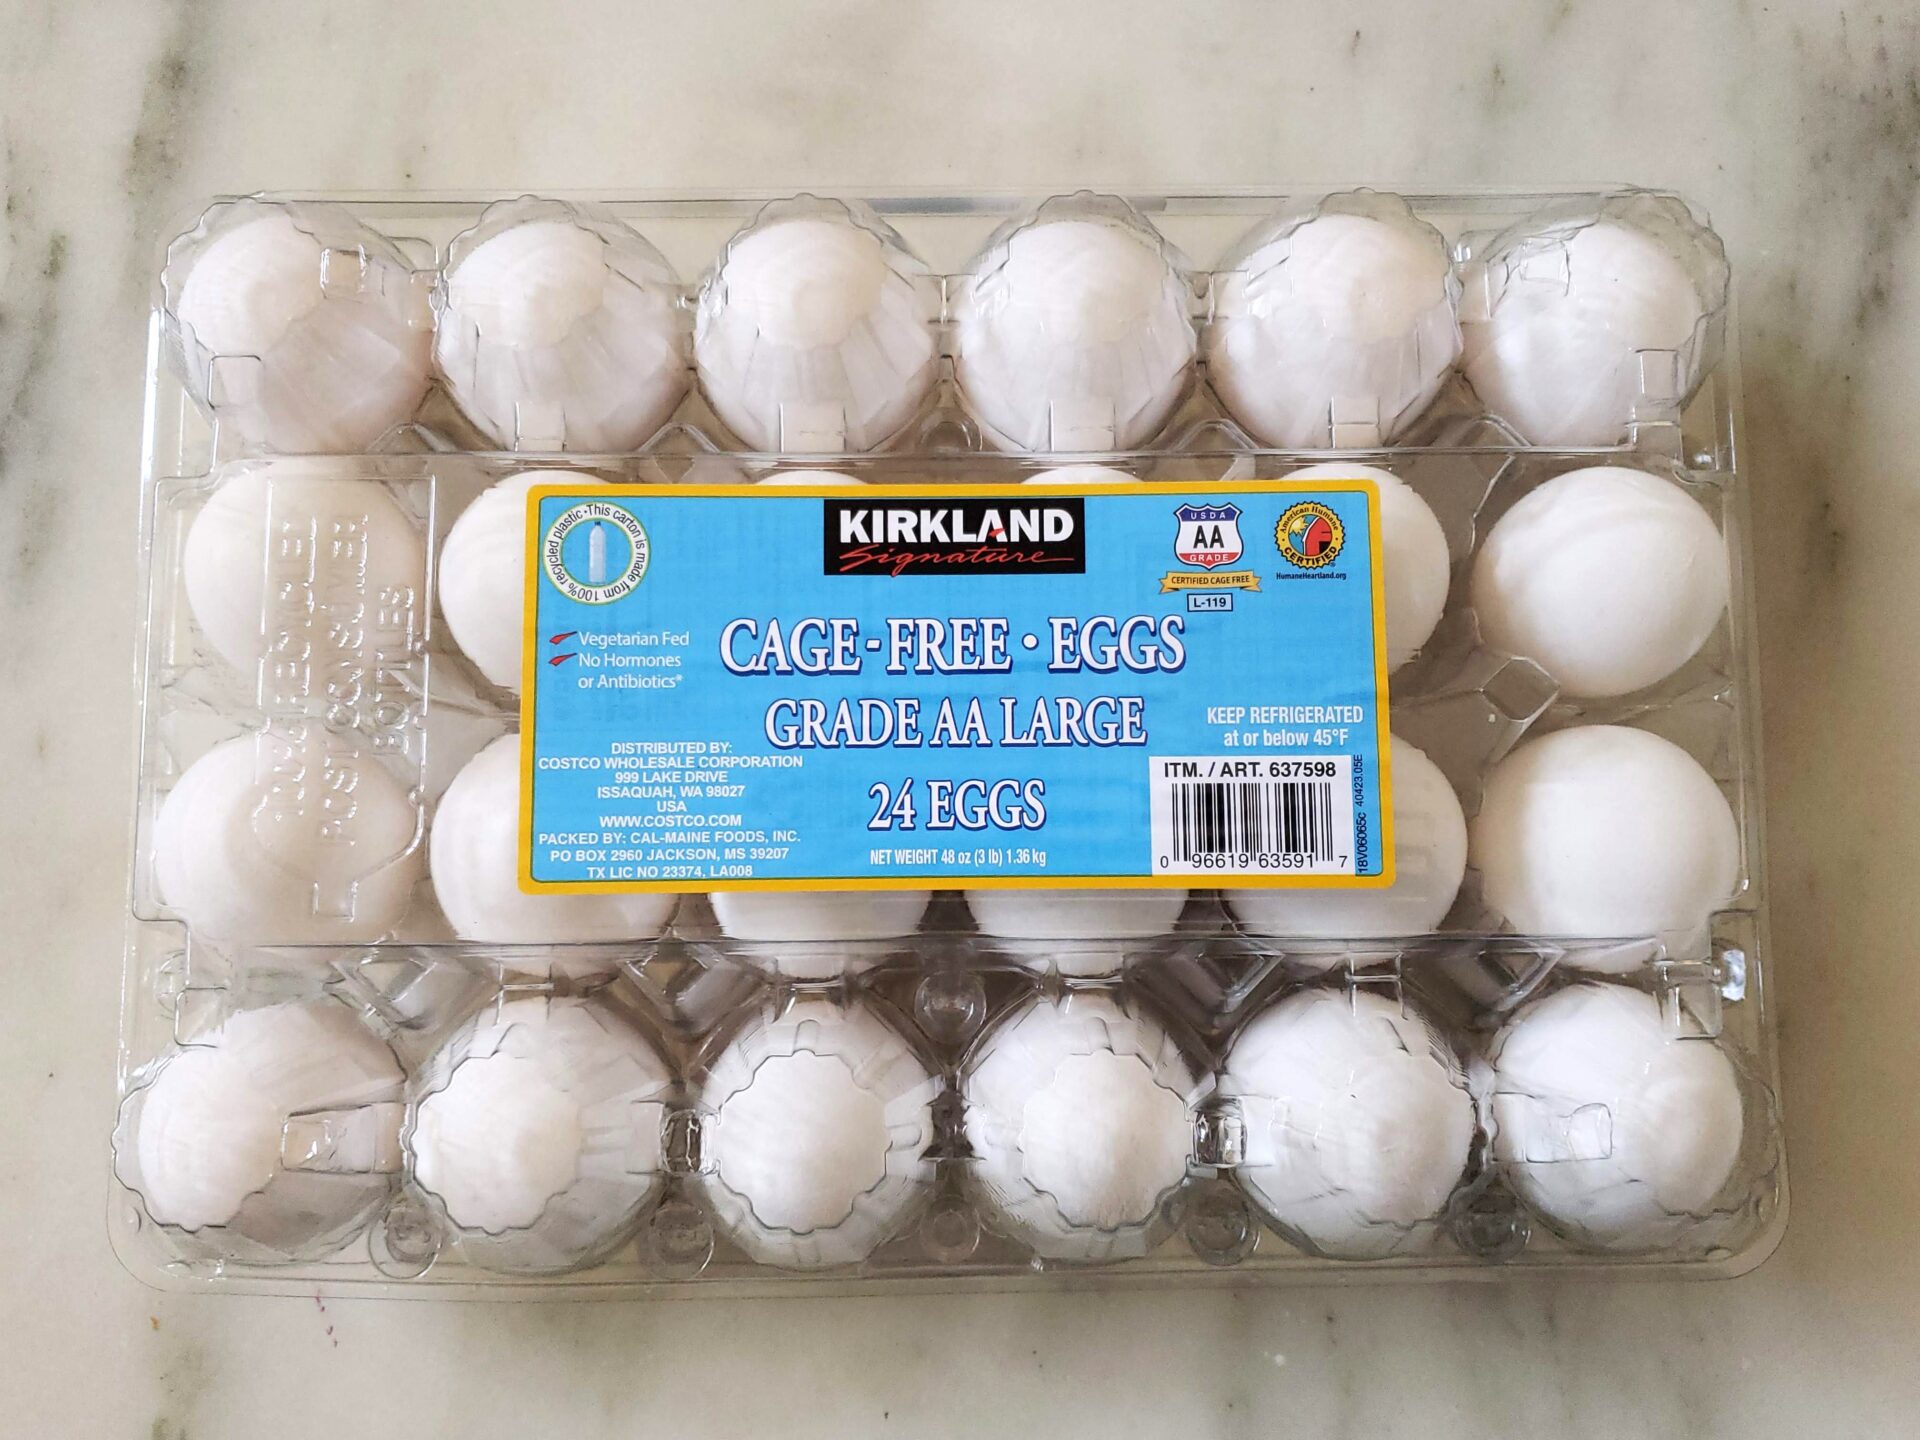 Costco Eggs Prices, Cage Free Vs. Free Range, Organic